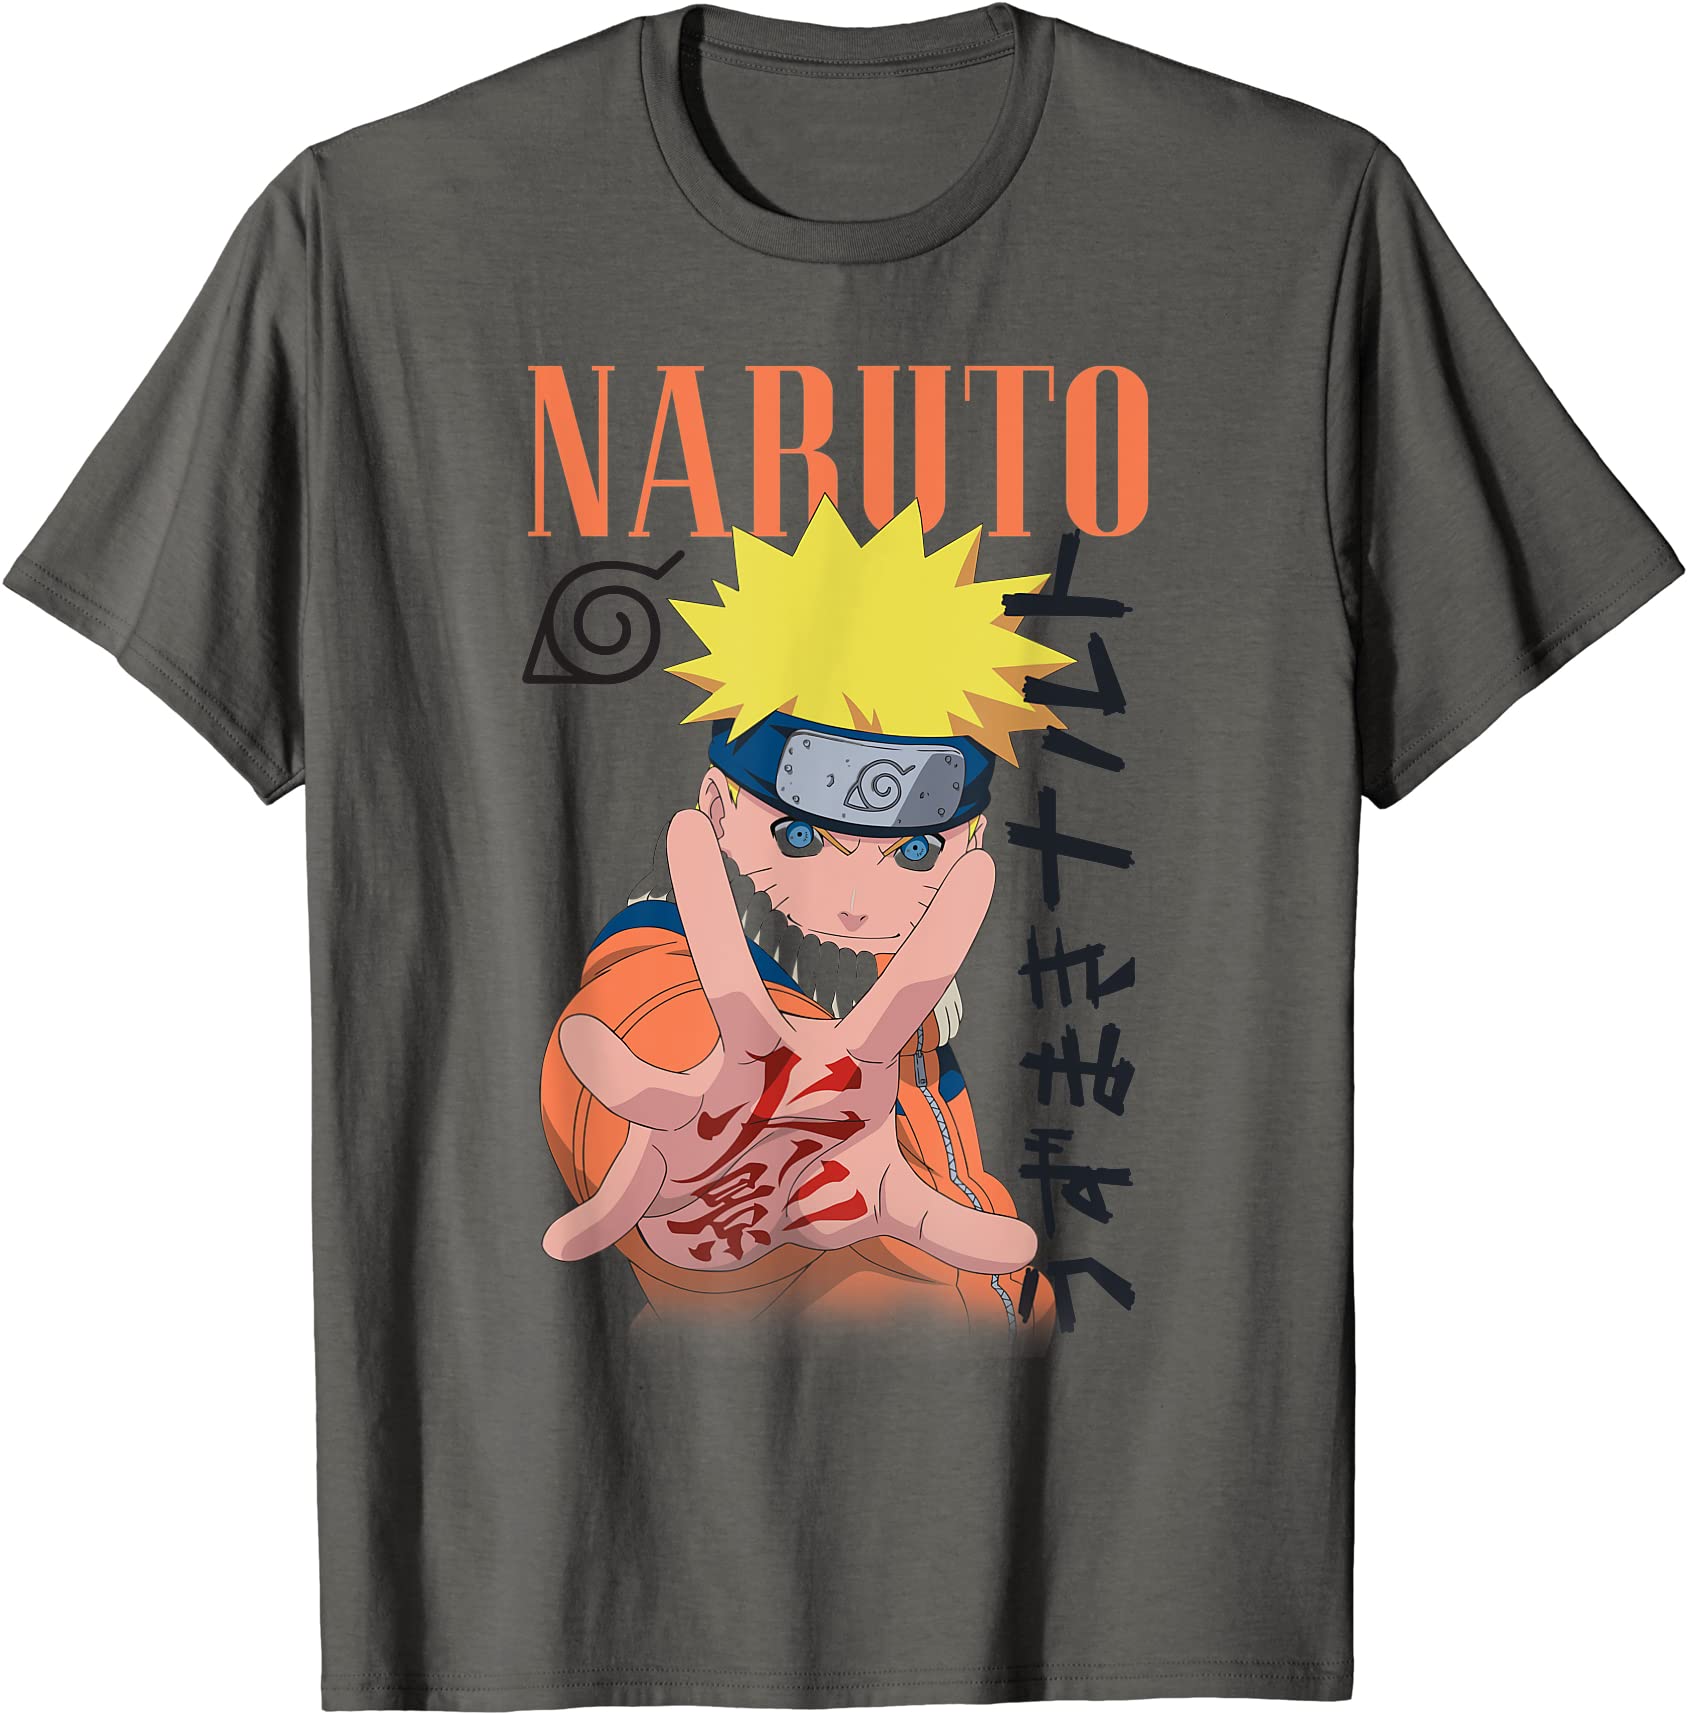 naruto classic naruto uzumaki amp kanji t shirt men - Buy t-shirt designs